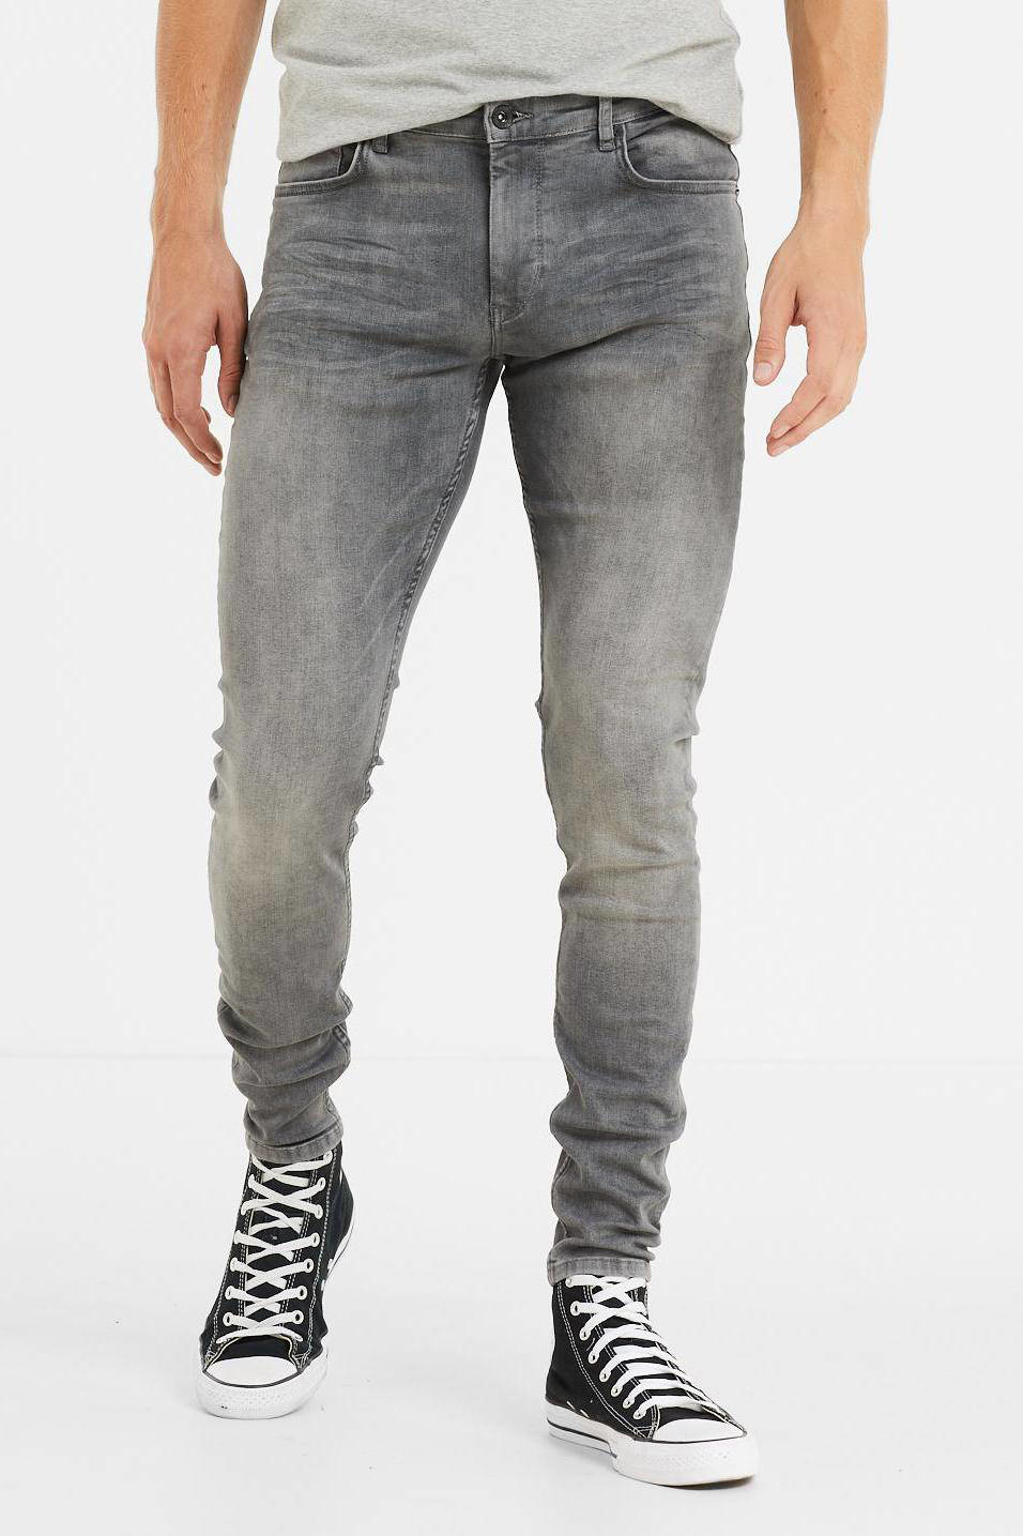 Purewhite skinny jeans The Dylan W0108  denim mid grey